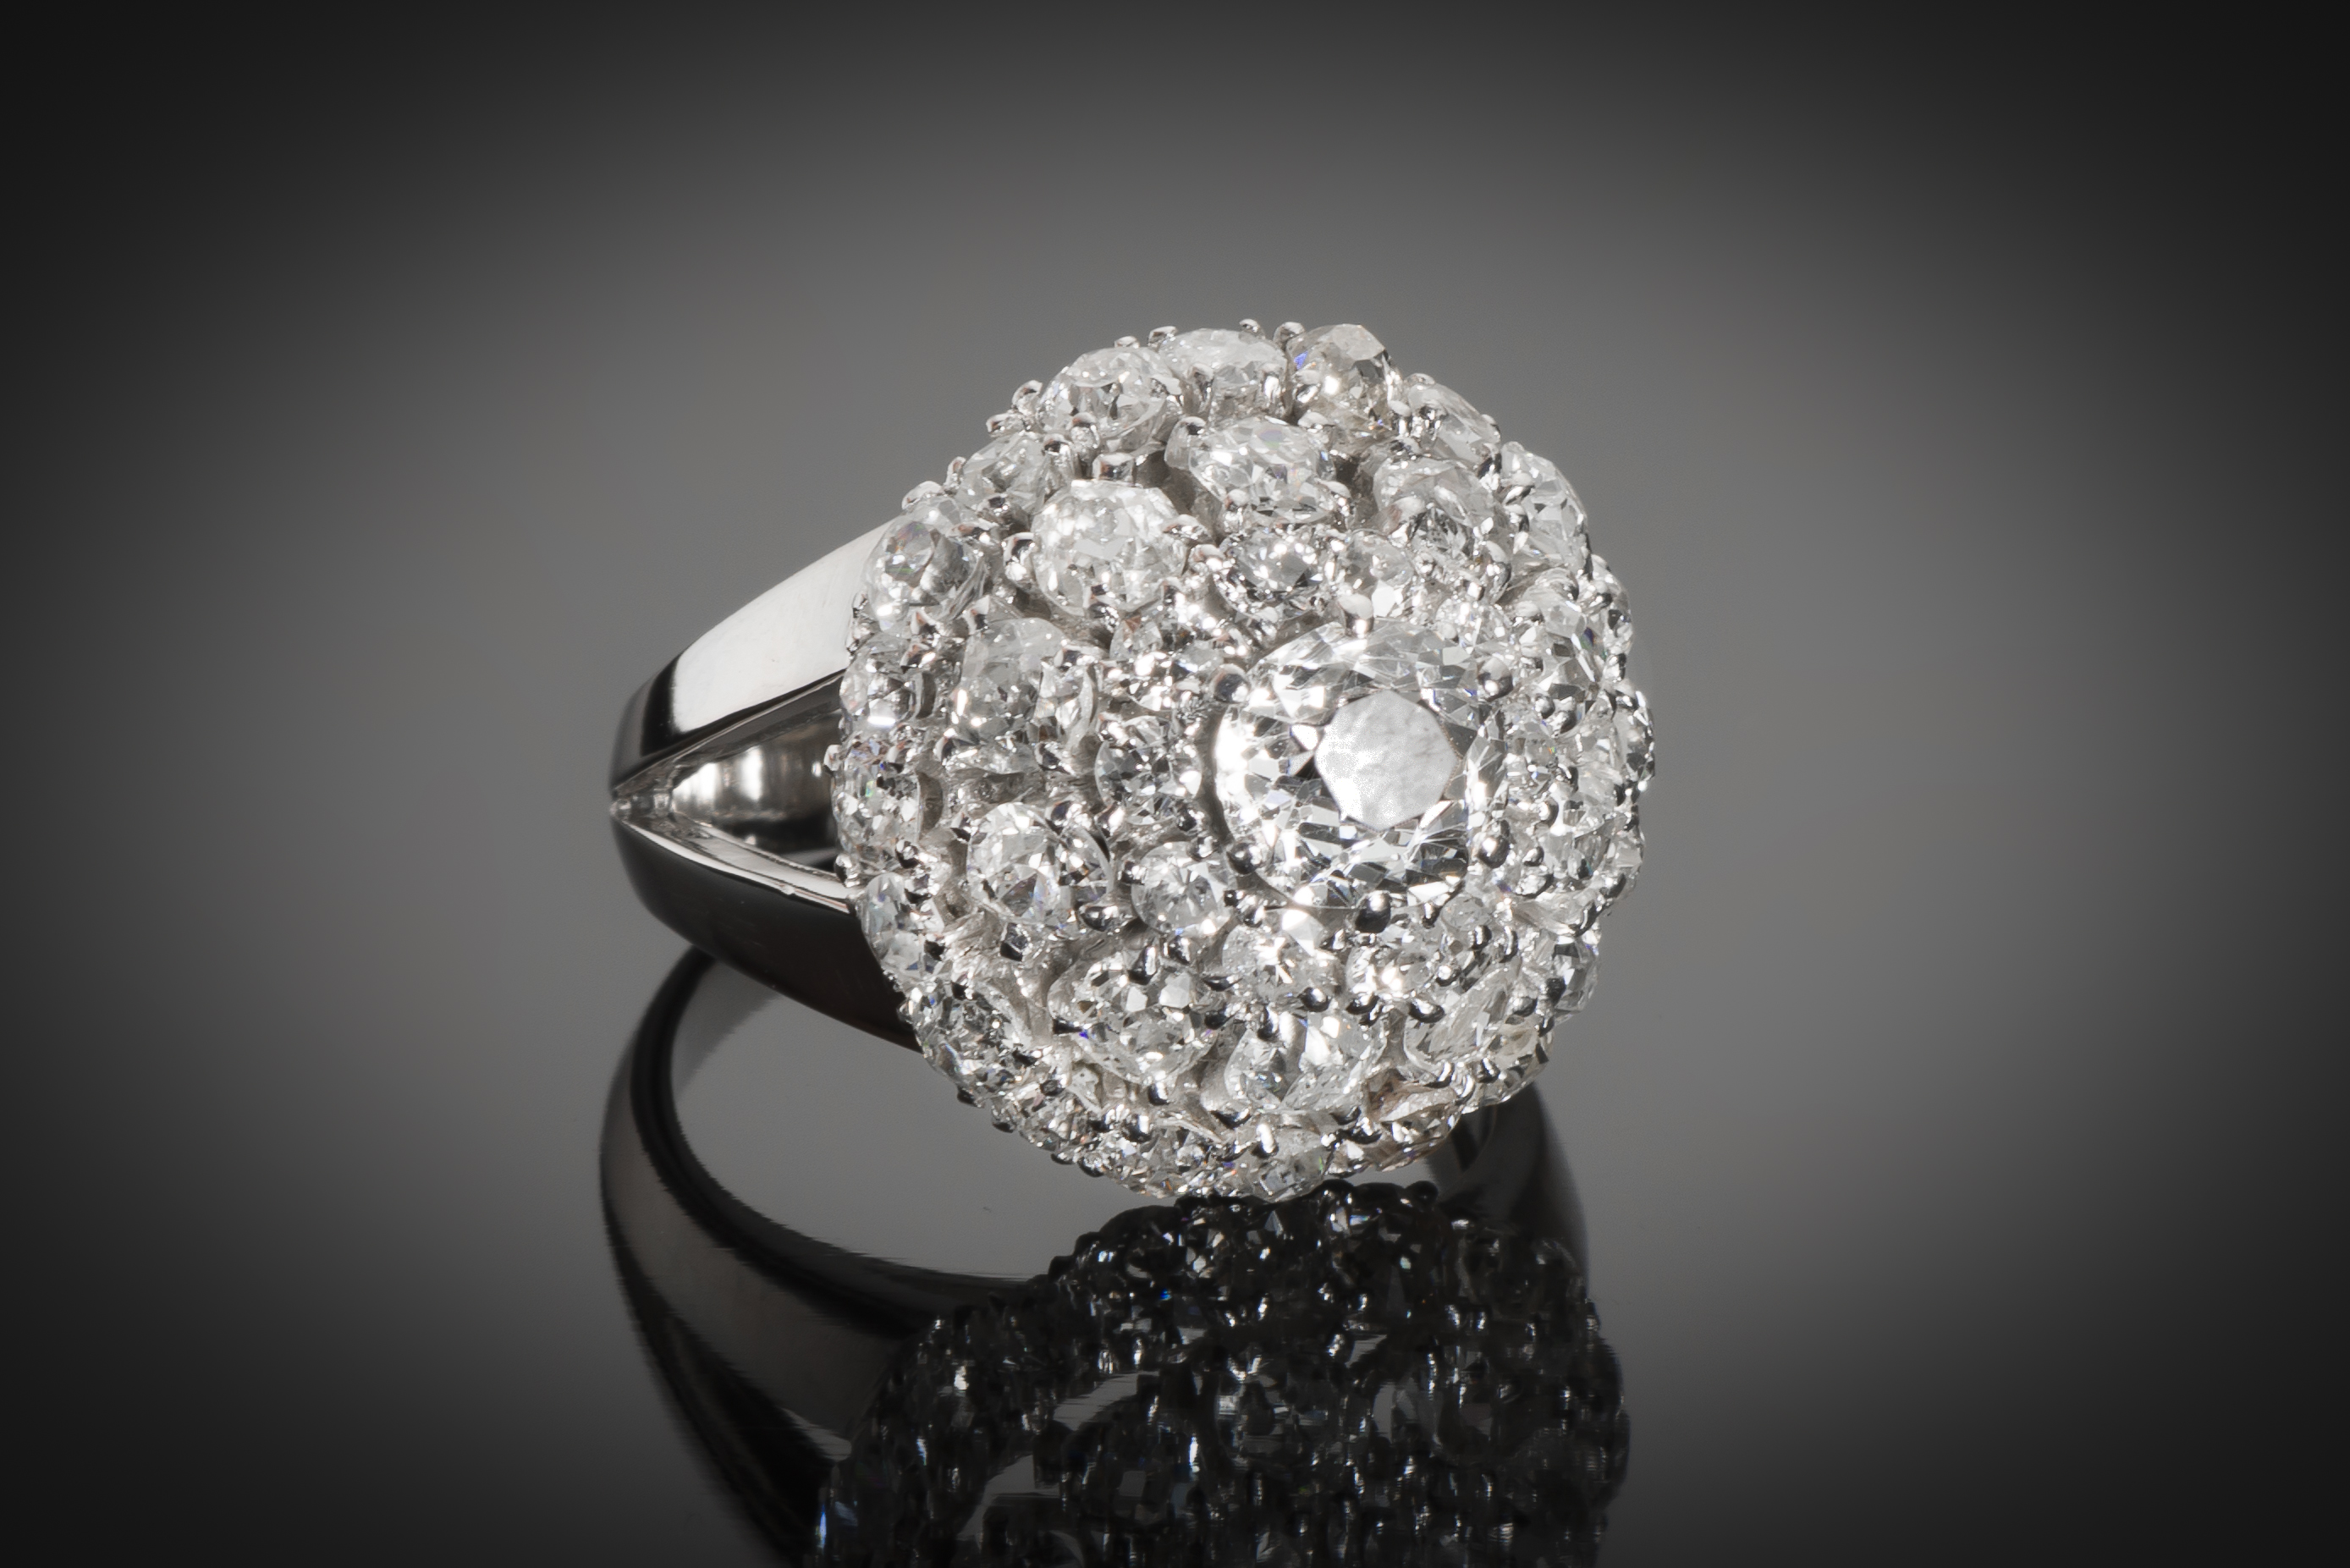 French Boucheron diamond ring (1.80 carat) circa 1950-1